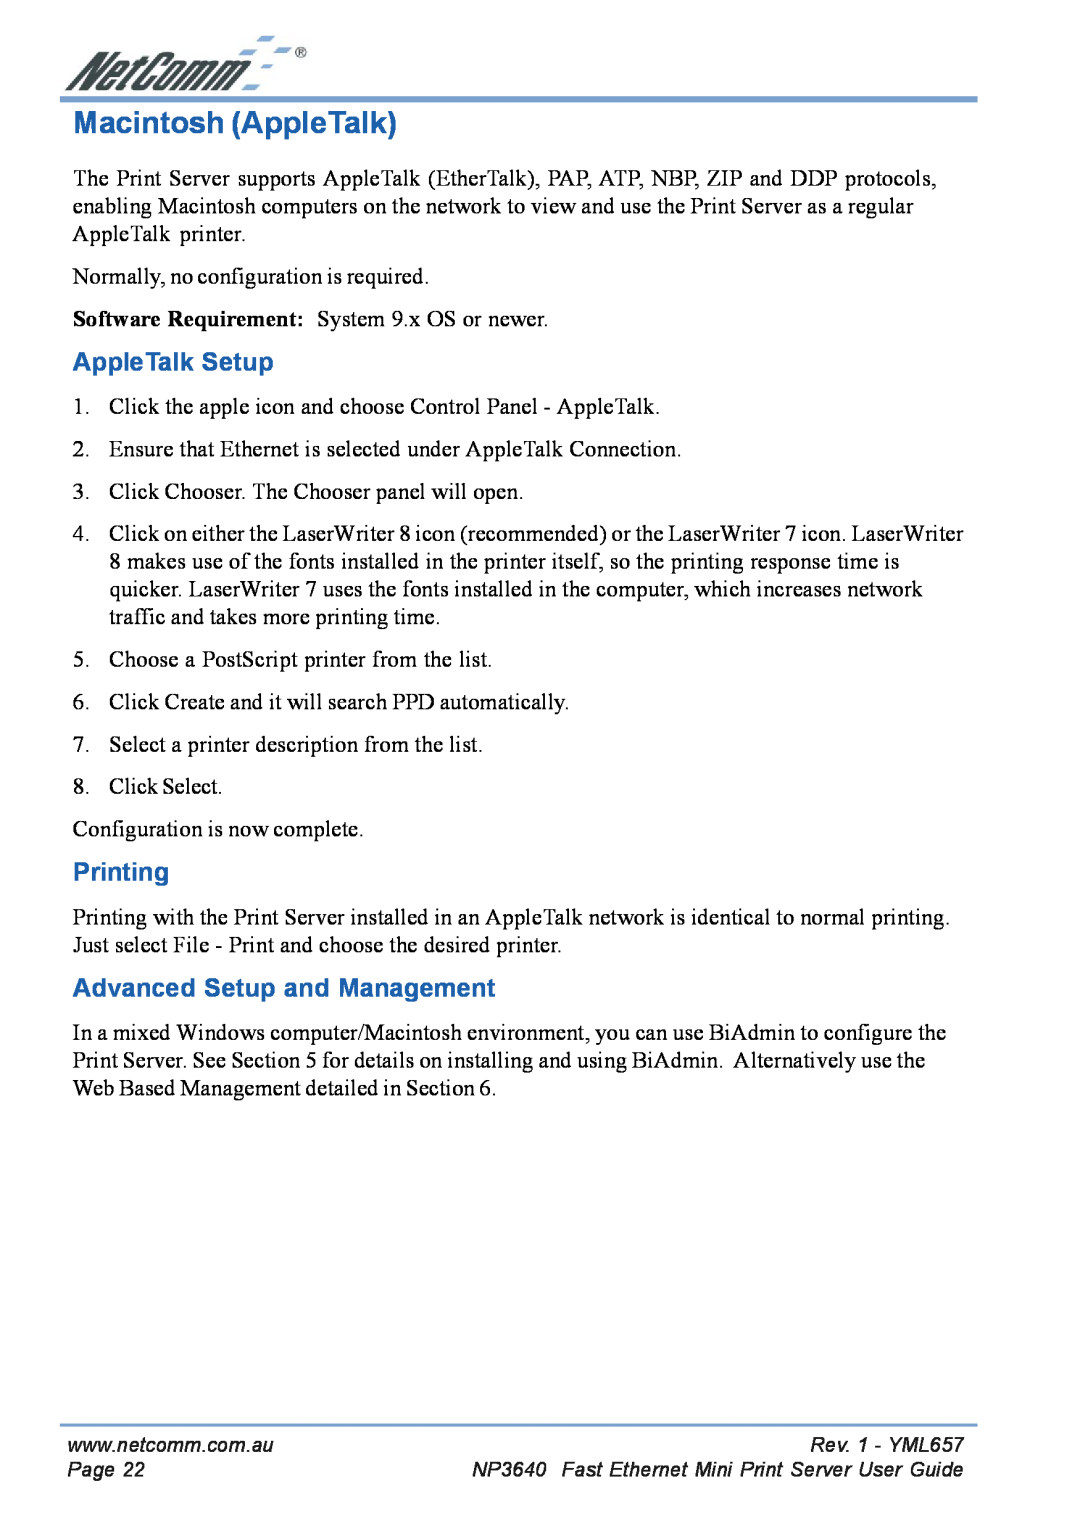 NetComm NP3640 manual Macintosh AppleTalk, AppleTalk Setup, Printing, Advanced Setup and Management 